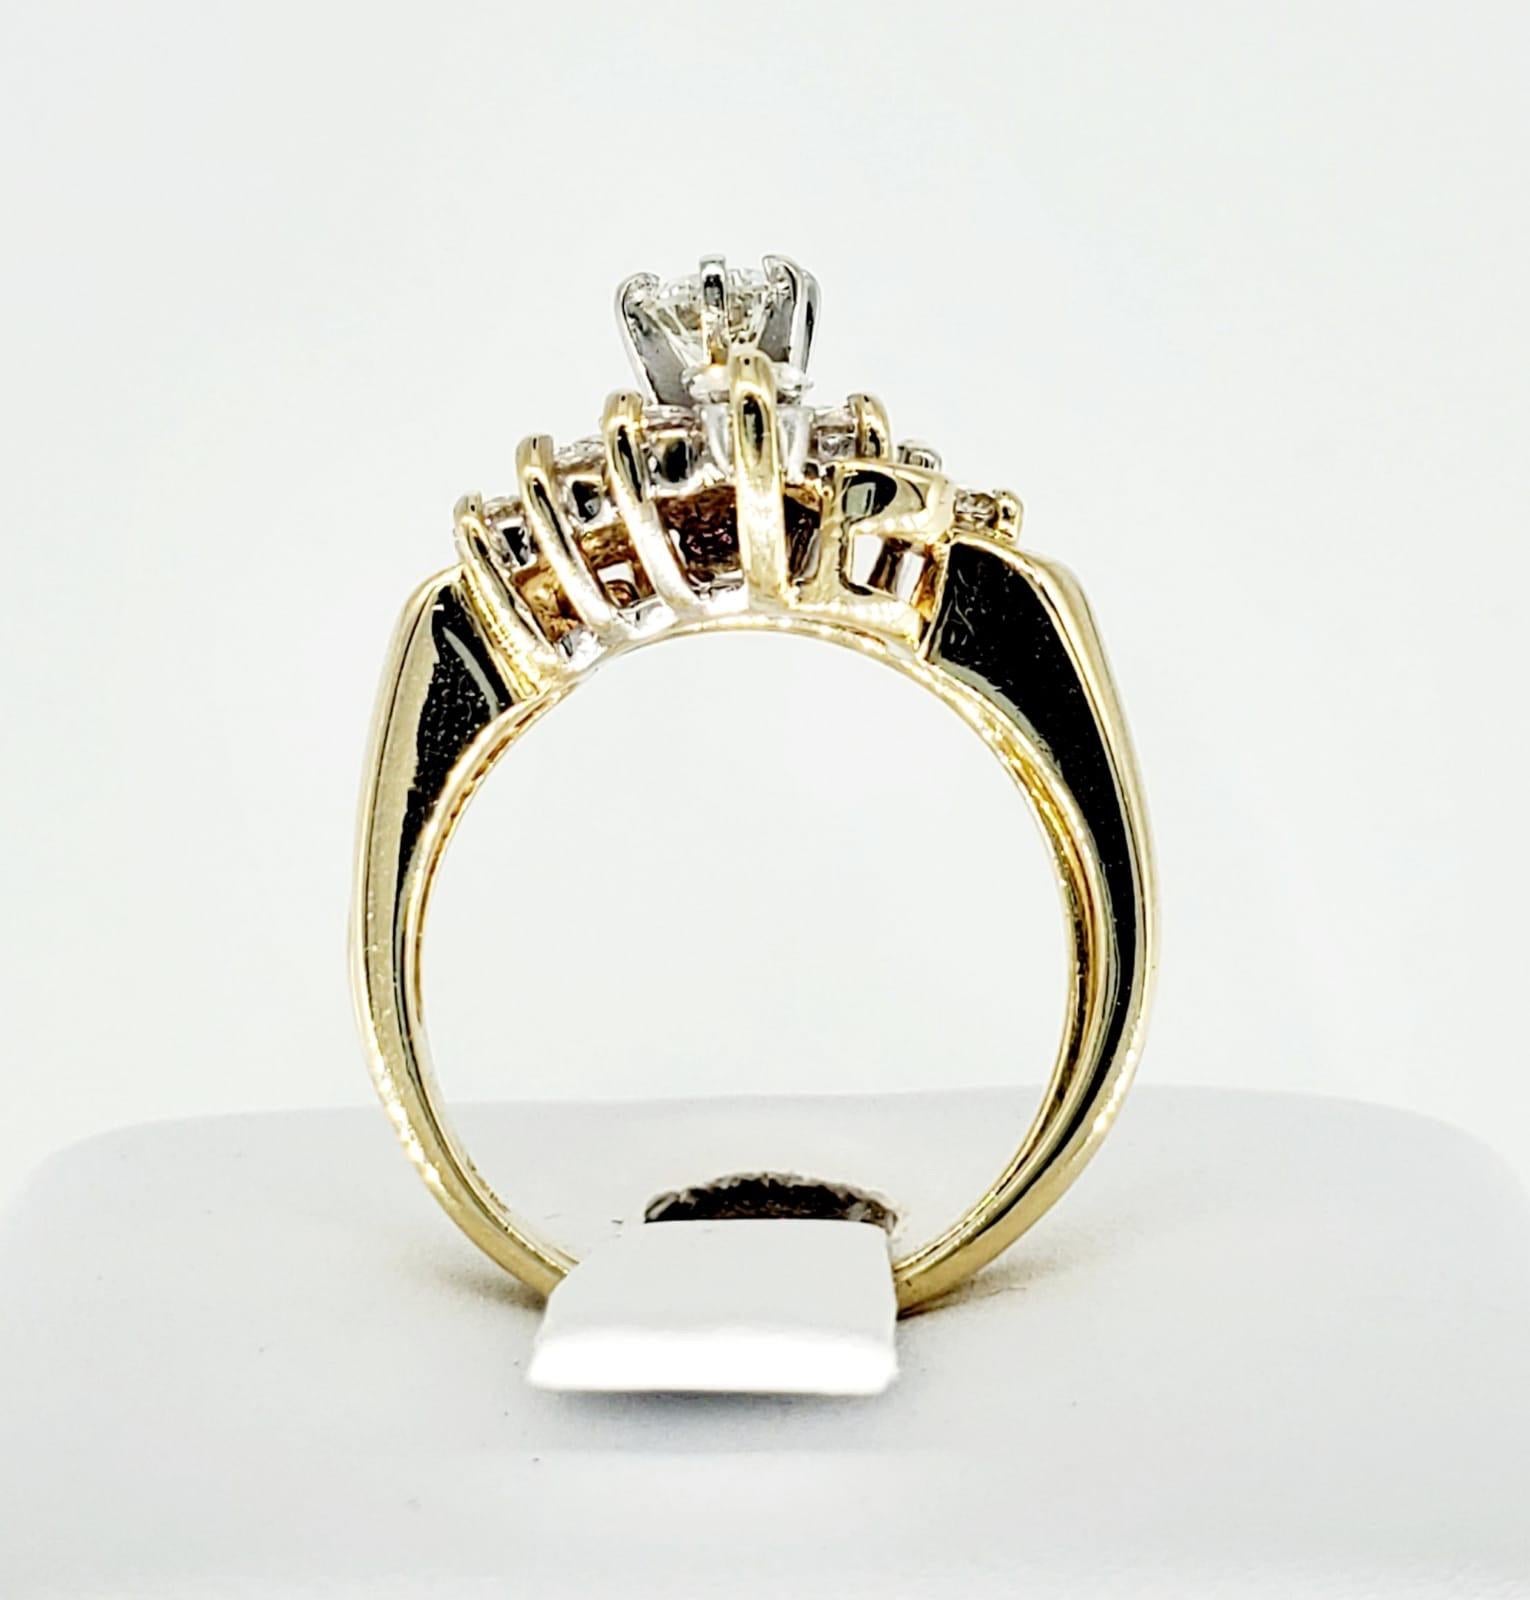 1980 engagement ring designs